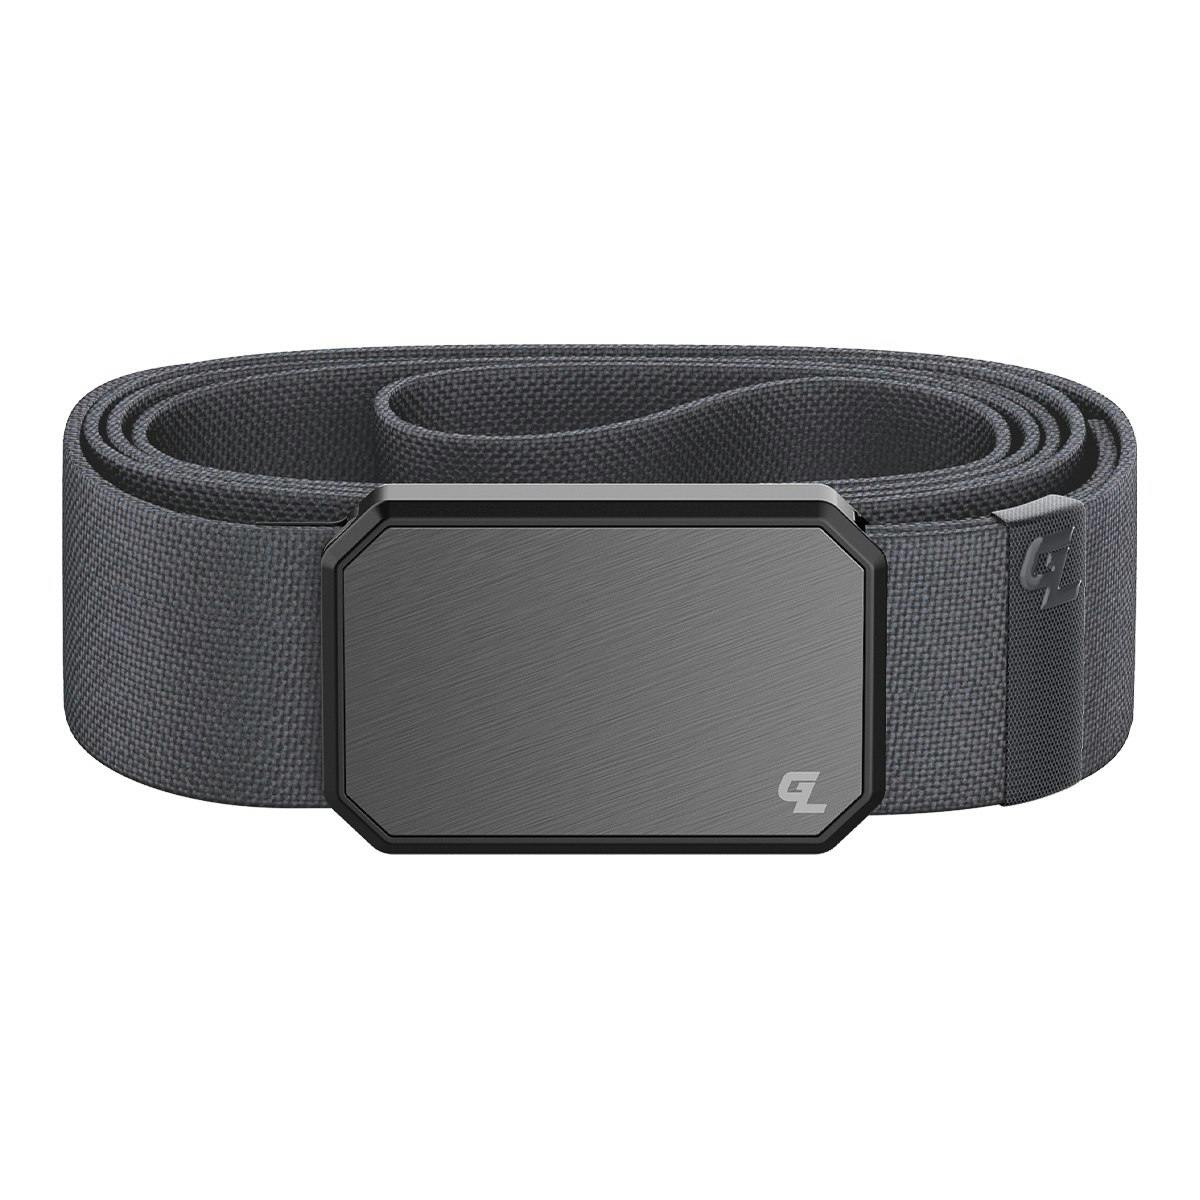 Groove Belt - Magnetic Buckle